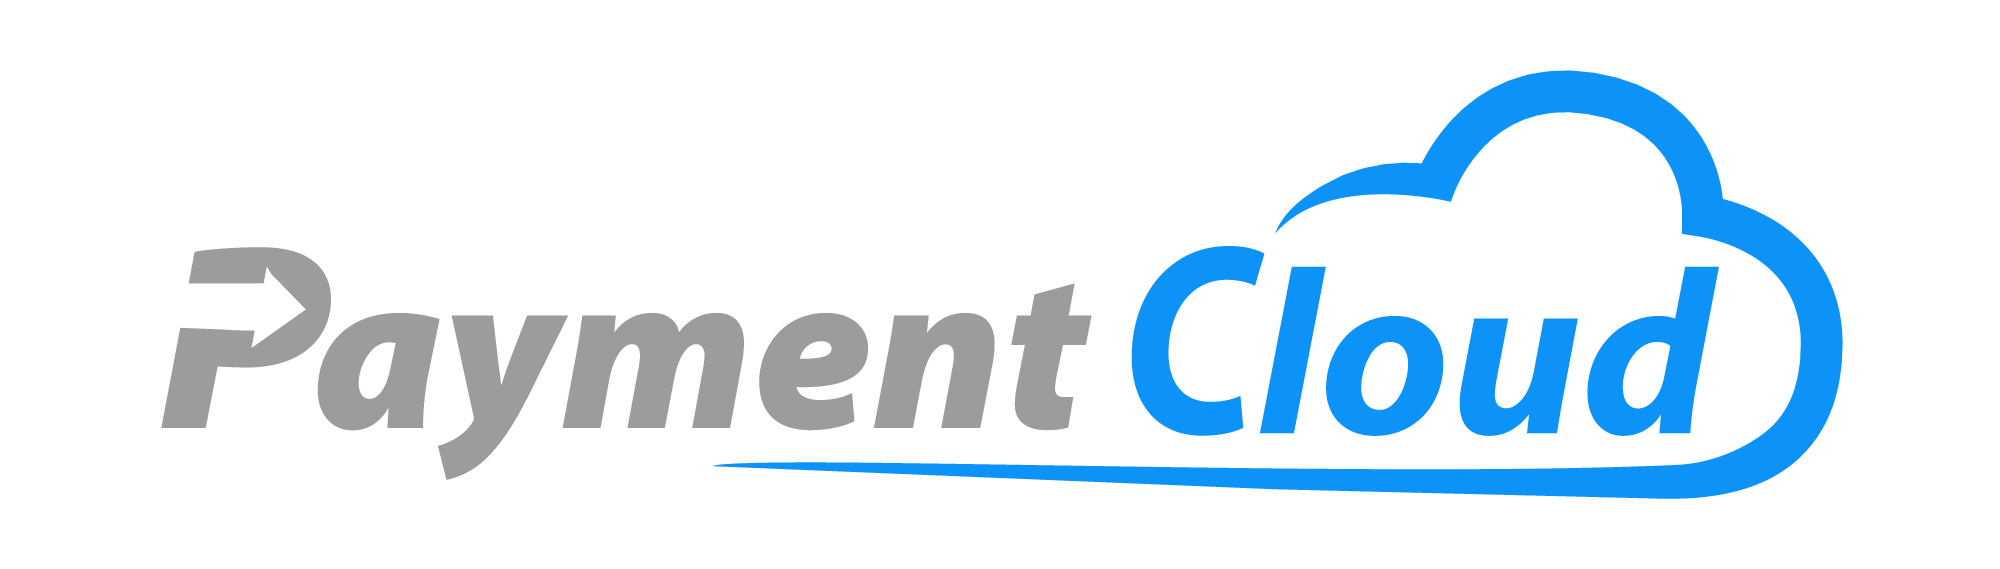 image of payment cloud logo